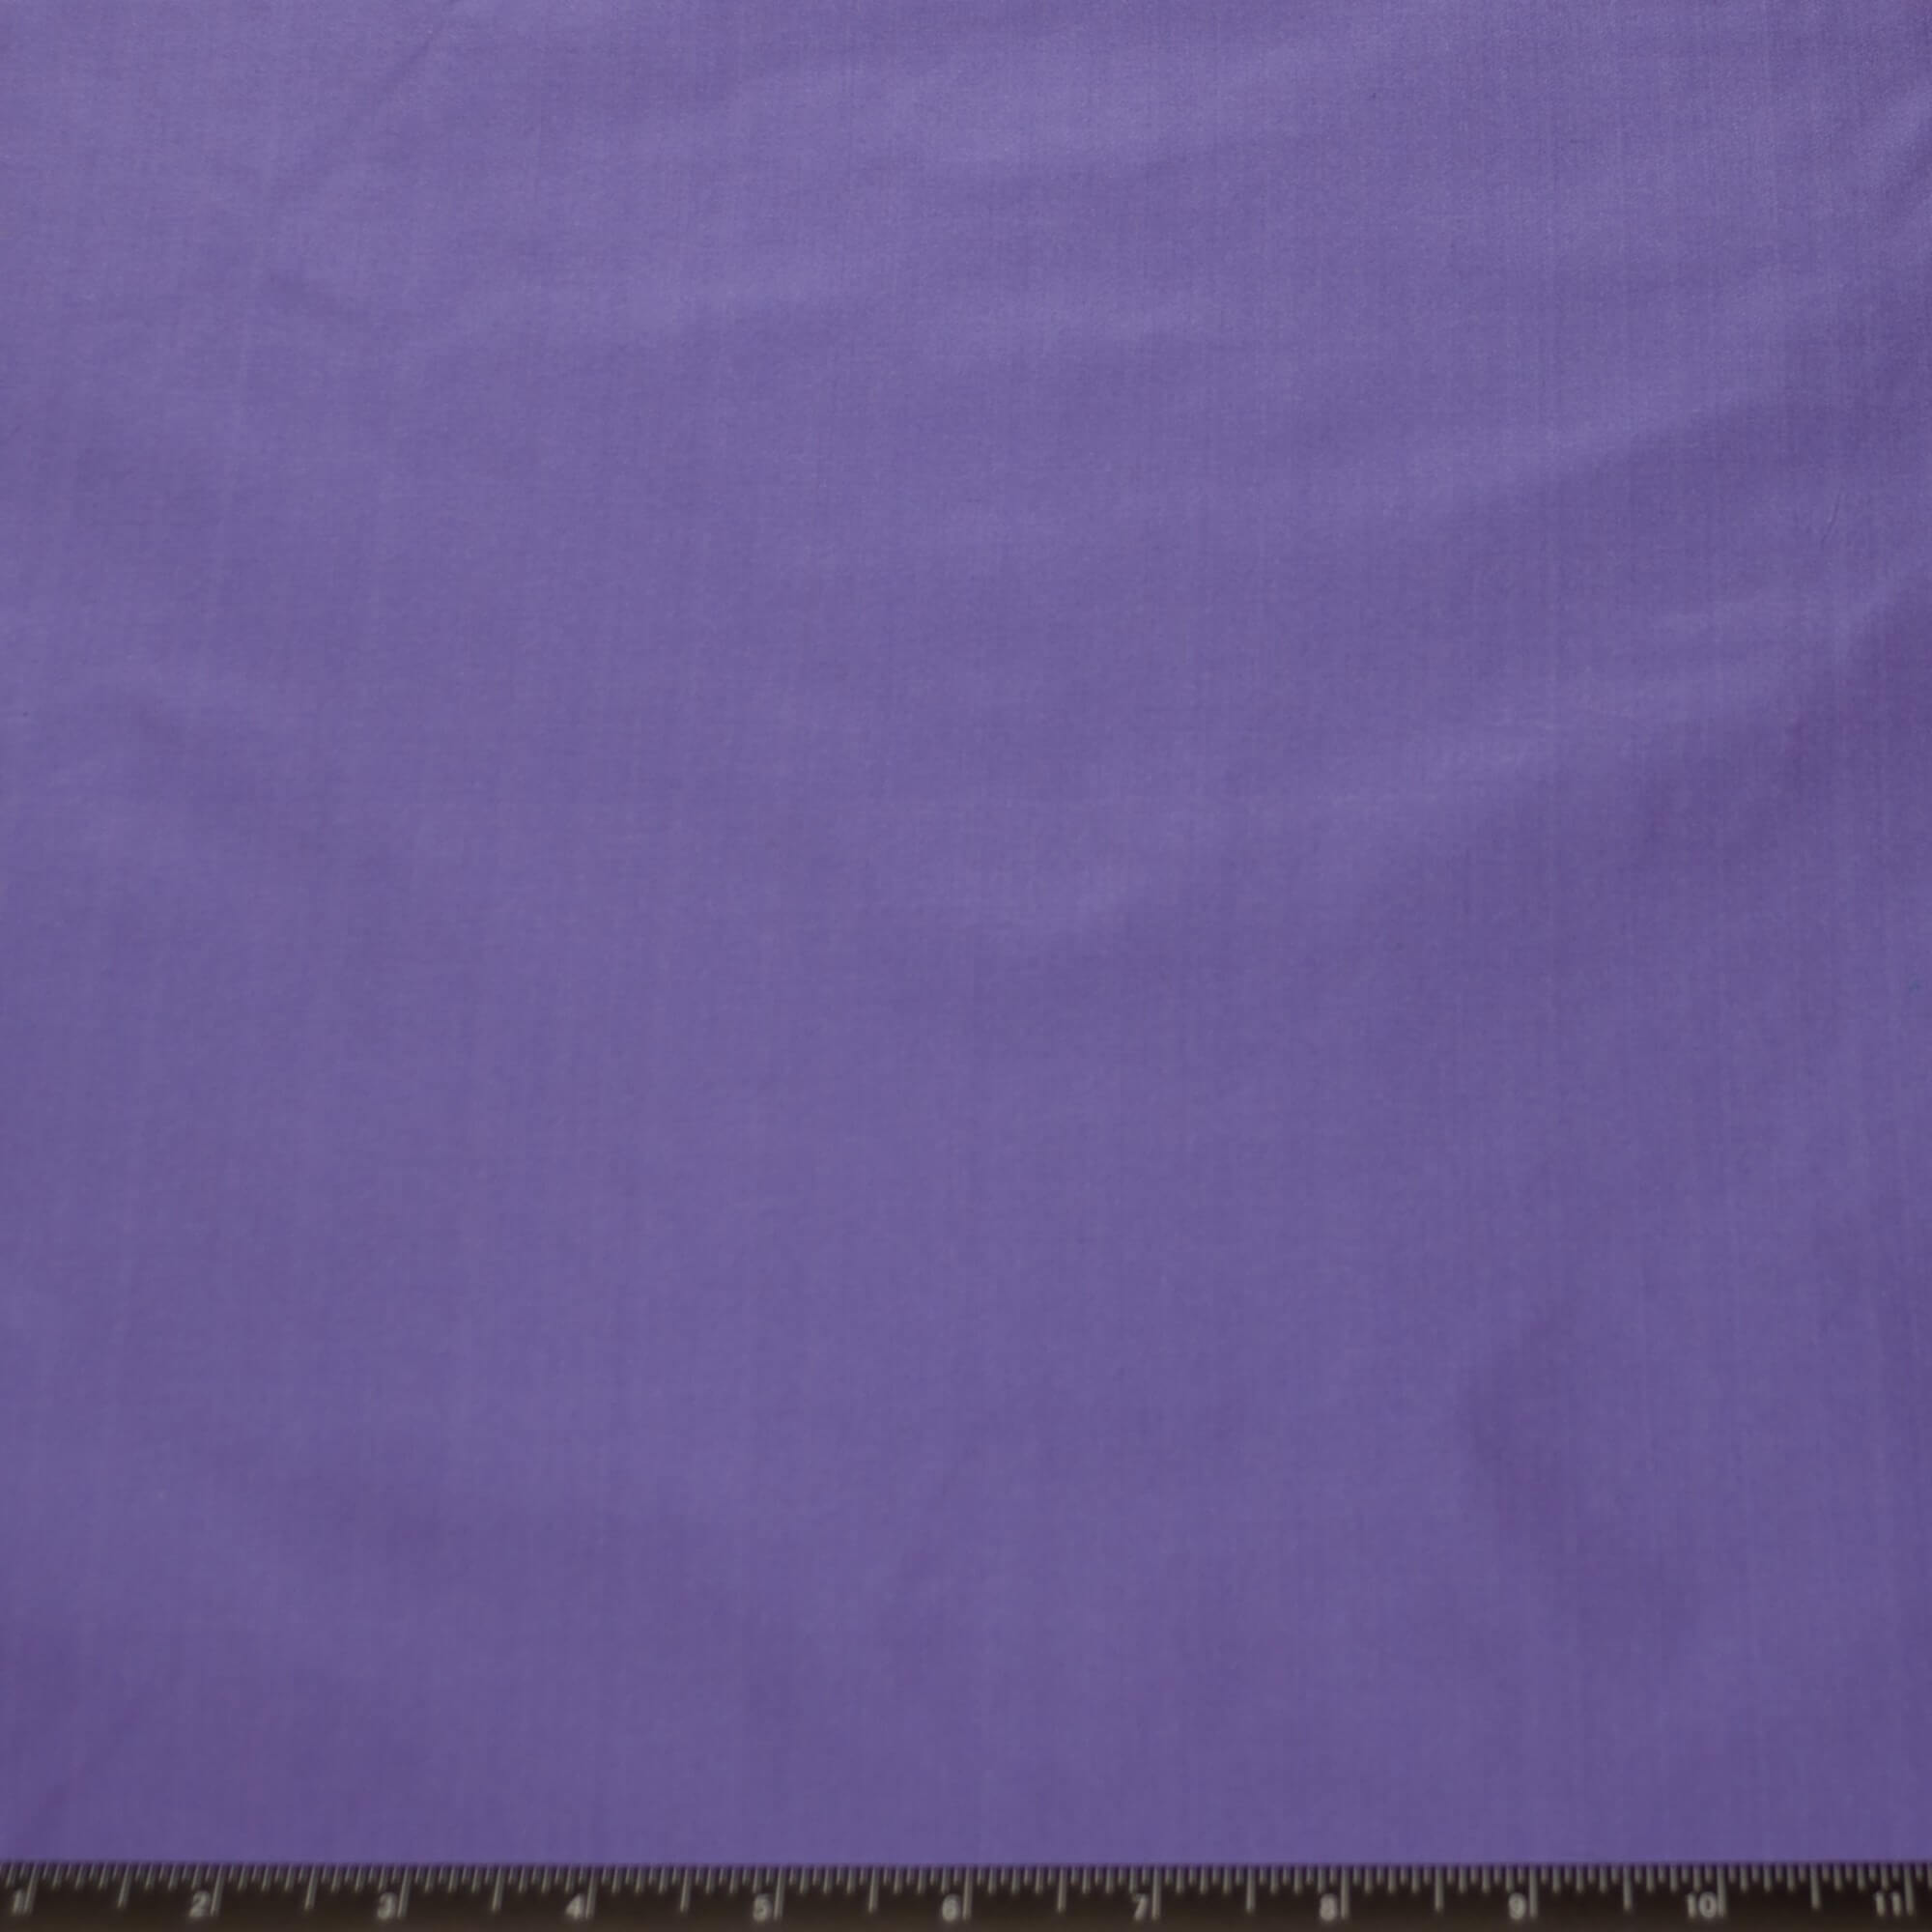 EP Silk #387 Pale Blue Purple 100% Silk Light Purple Silk Taffeta Fabric By the yard 55 WIDE NEW Pale Lilac Purple Silk Taffeta